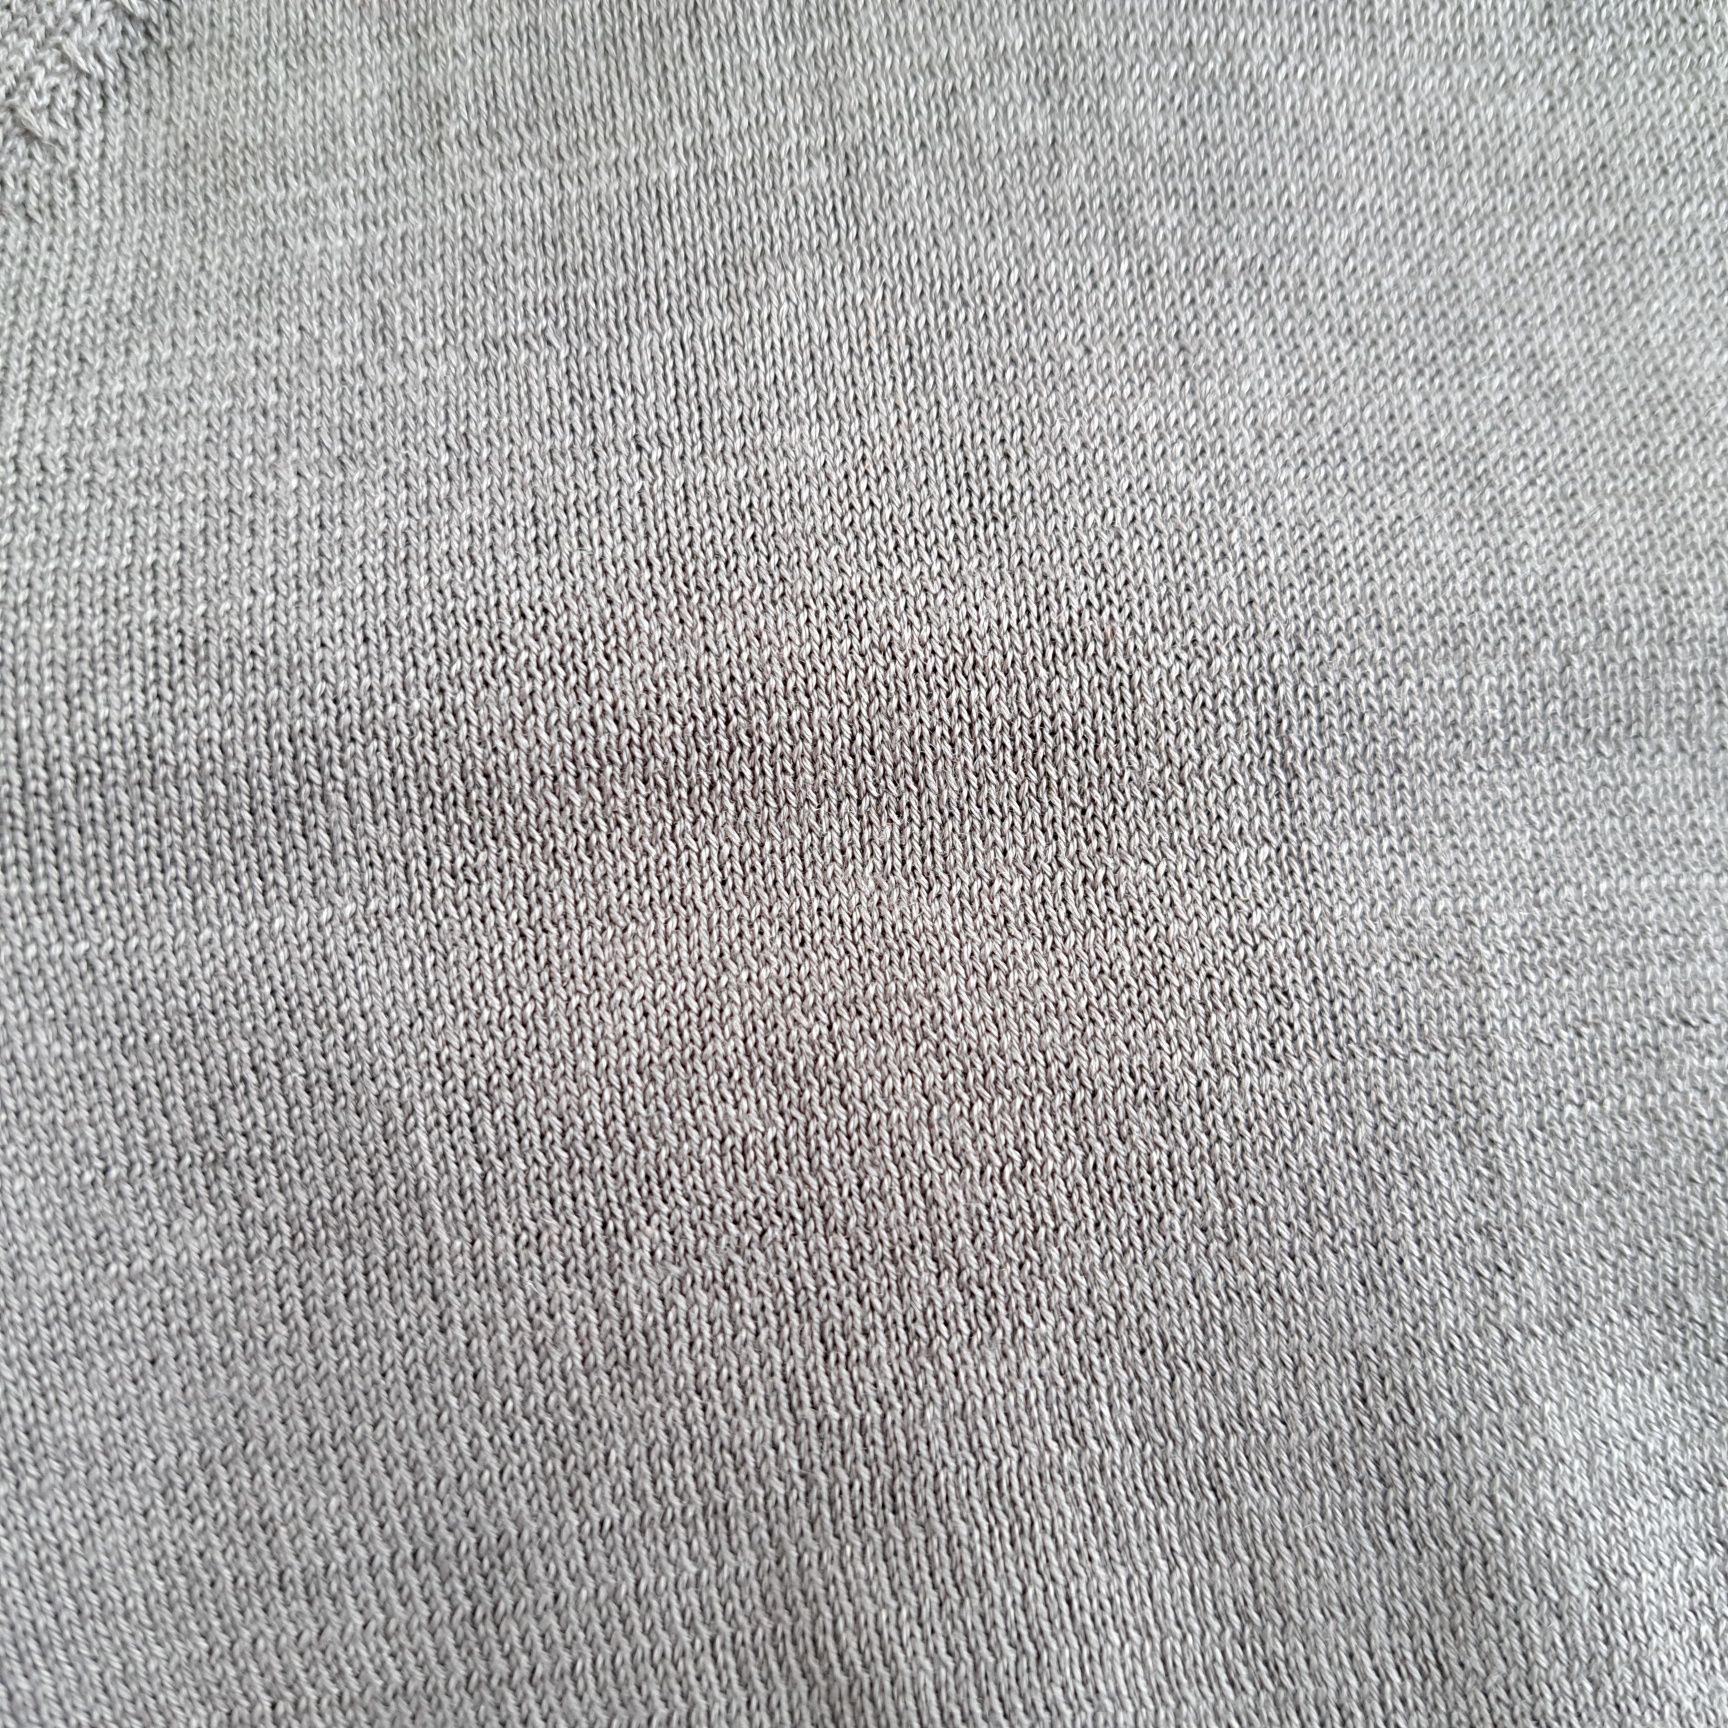 Sweterek bluzka H&M swete jedwab